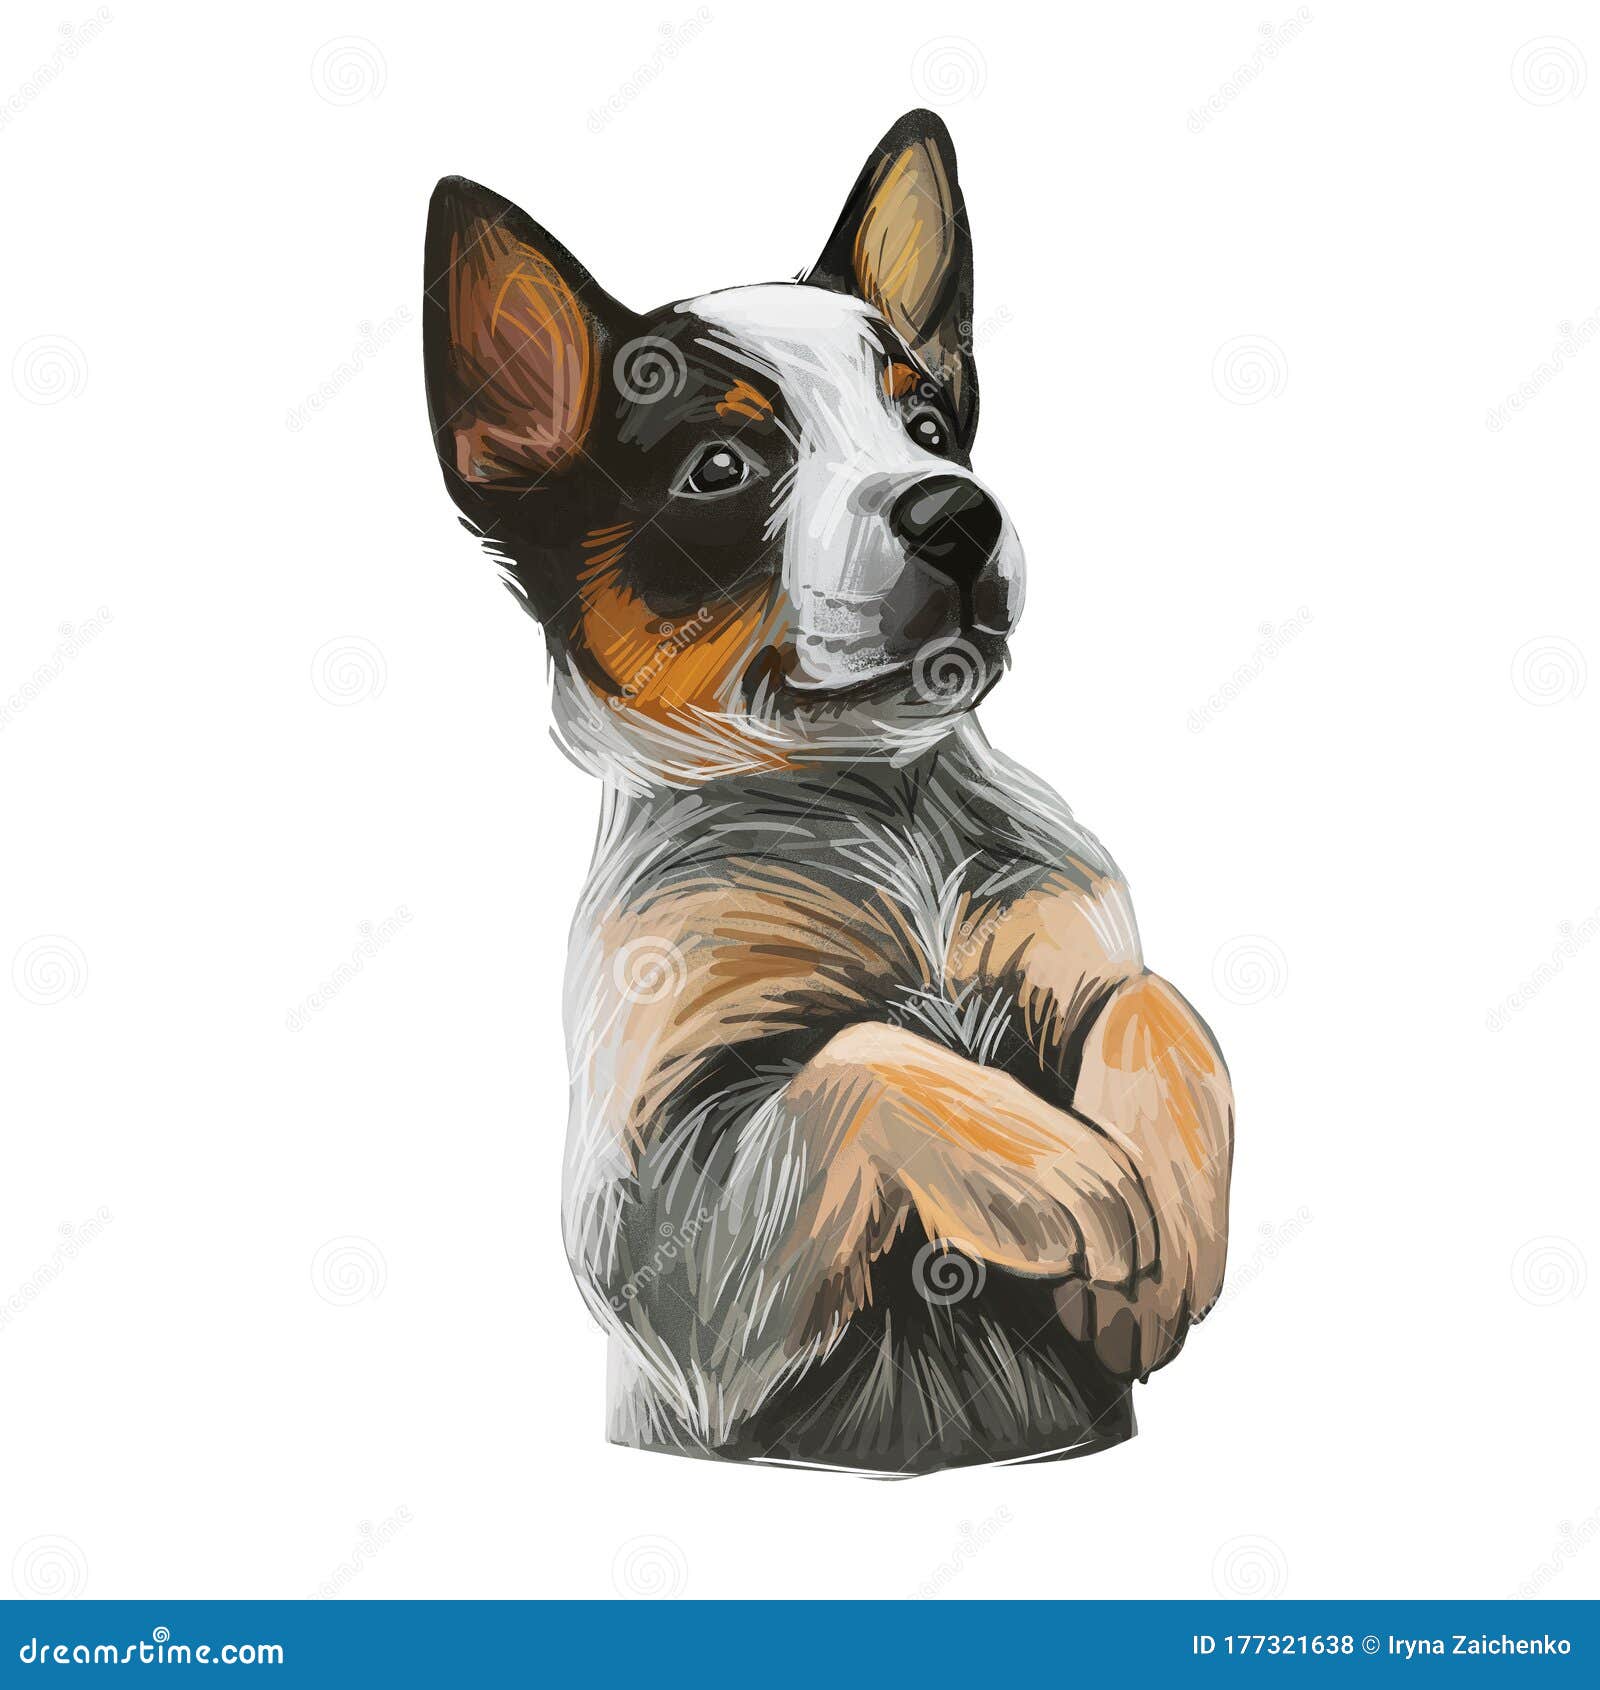 Texas Heeler Puppy Crossbred Herding Dog Isolated. Cross Australian Cattle Dog, Border Collie and Australian Shepherd. Digital Art Stock Photo - Image of drawn, 177321638